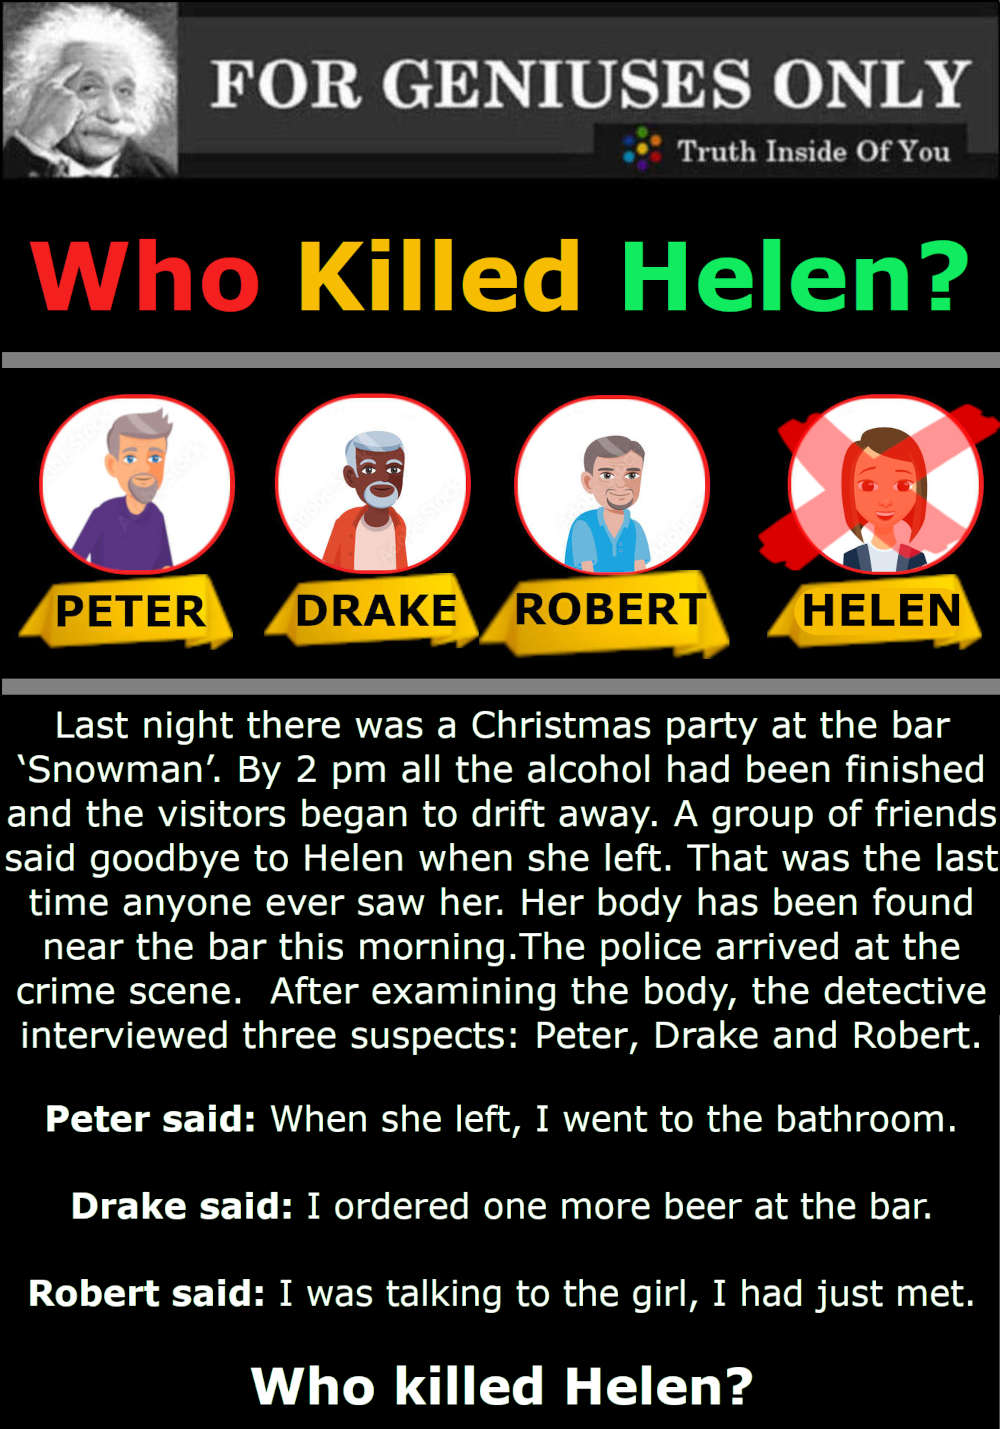 Who Killed Helen?